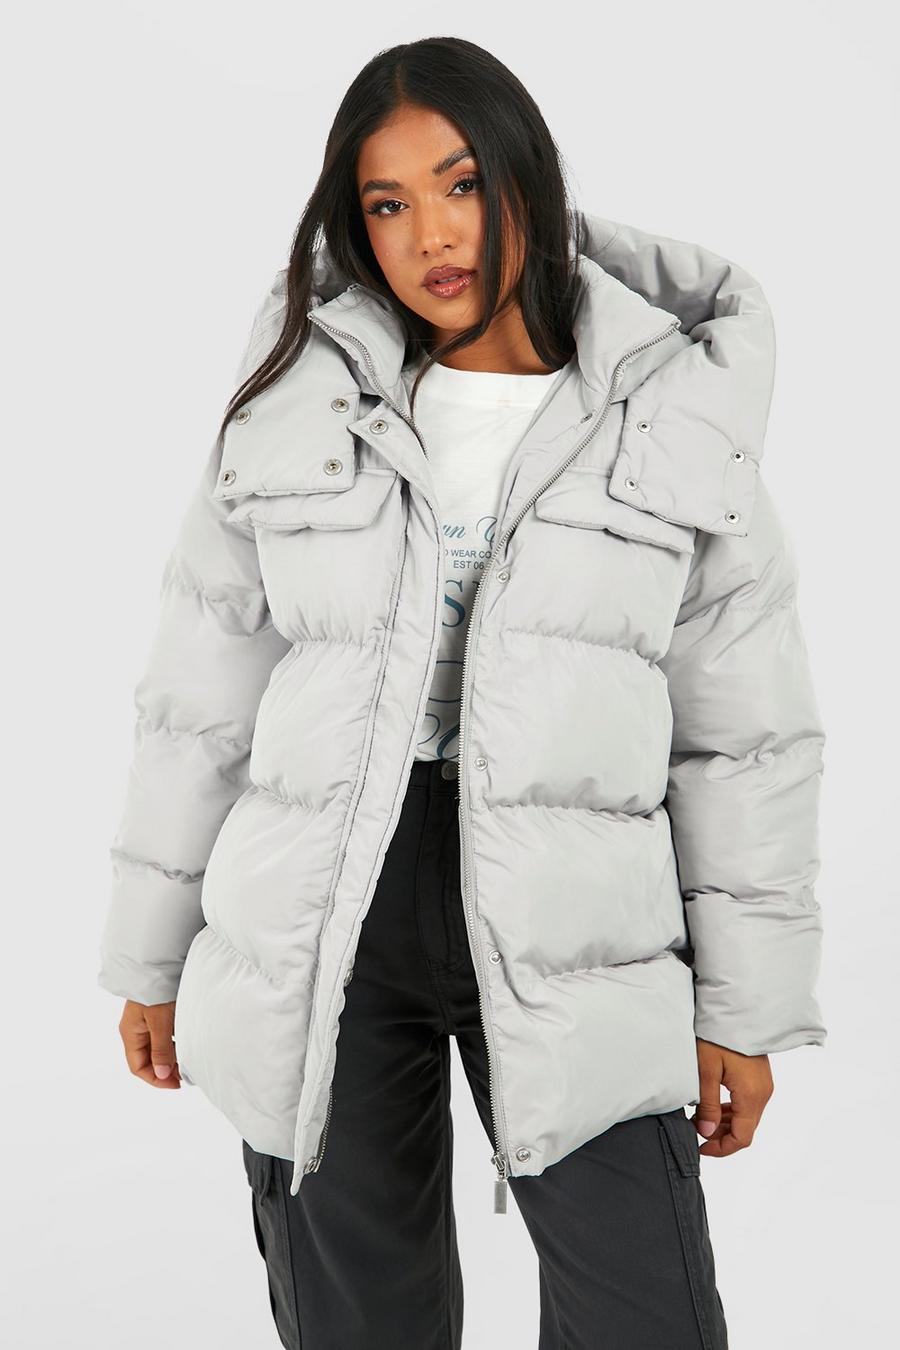 FOX Racing Girls Large Puffer Jacket Full Zip Pink Black Winter Coat Fur  Hooded